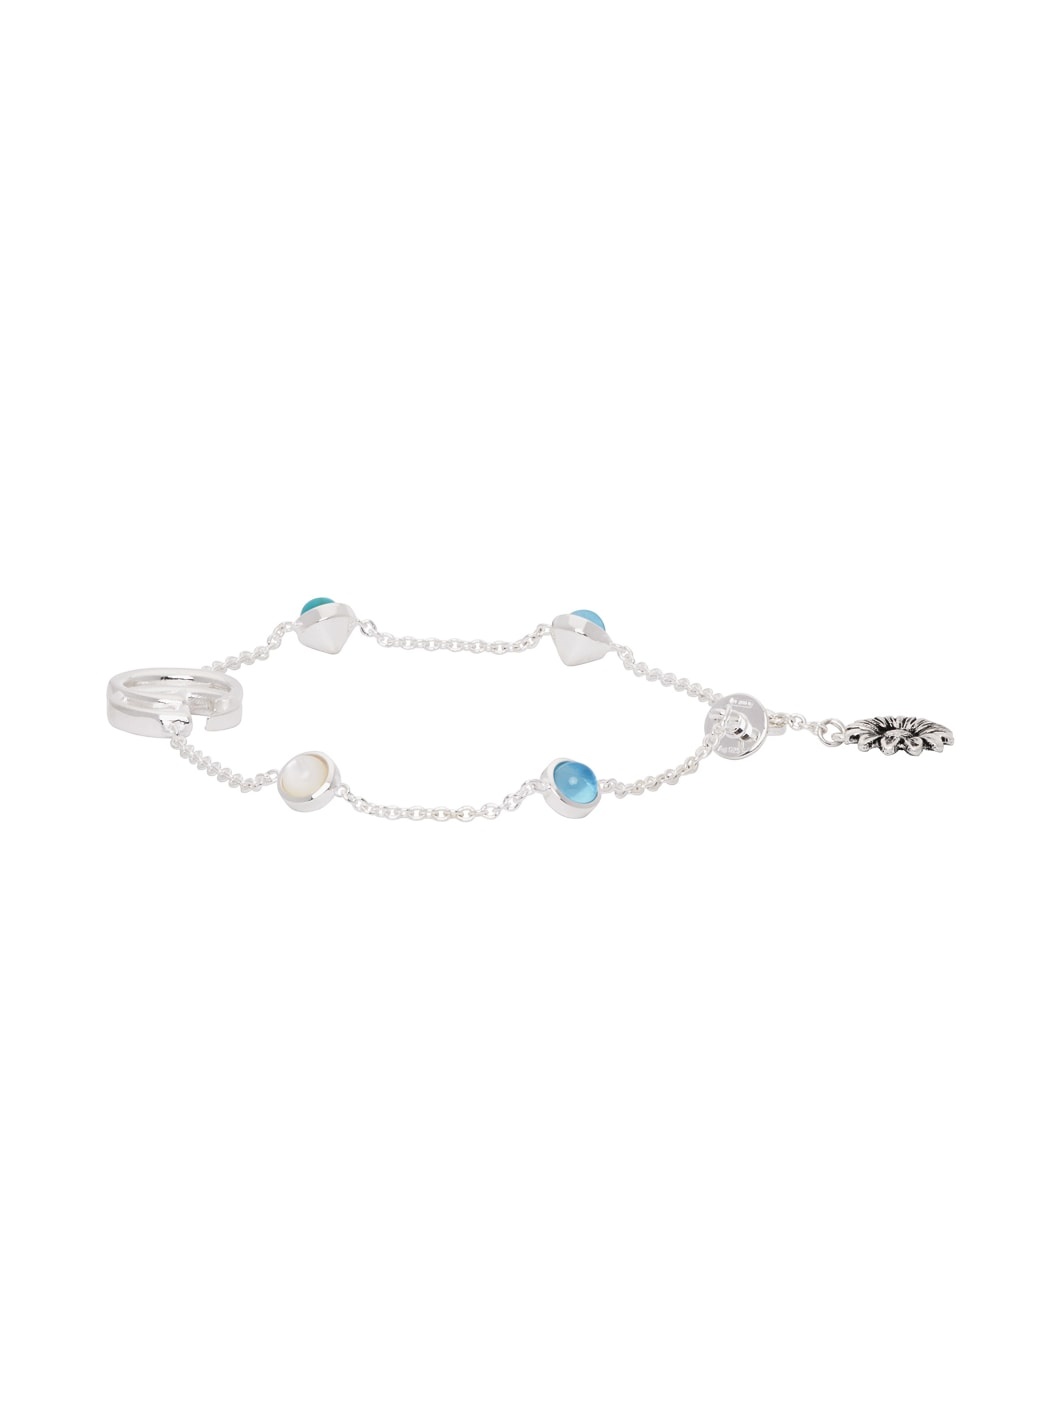 Silver GG Flower Bracelet - 3